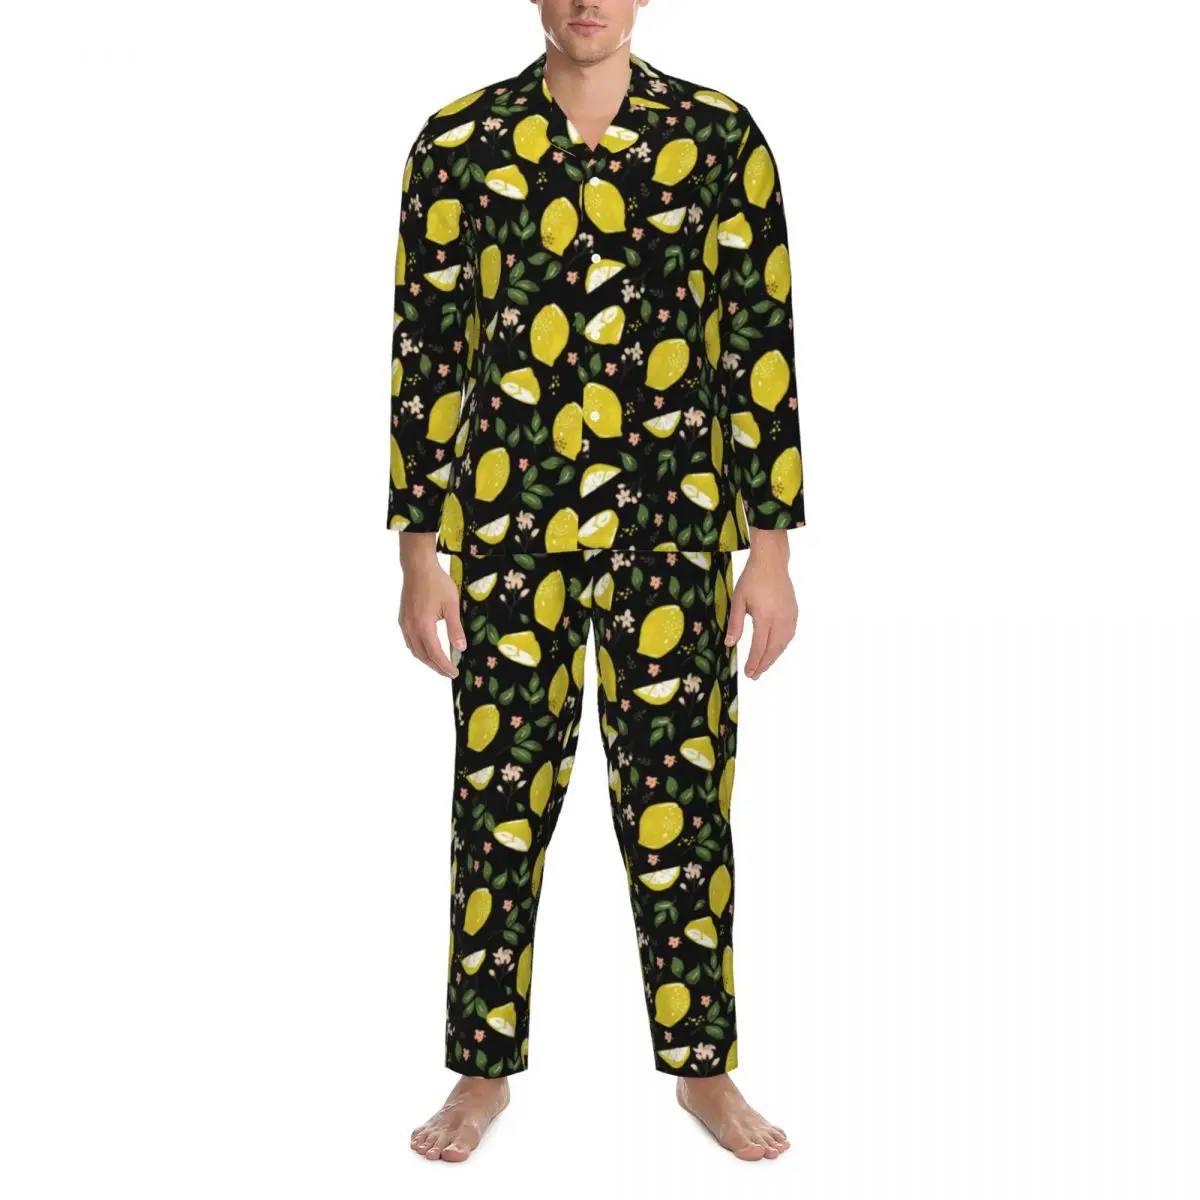 

Yellow Lemon Pajama Set Spring Bright Fruit Print Lovely Sleep Sleepwear Male 2 Piece Retro Oversized Design Nightwear Present